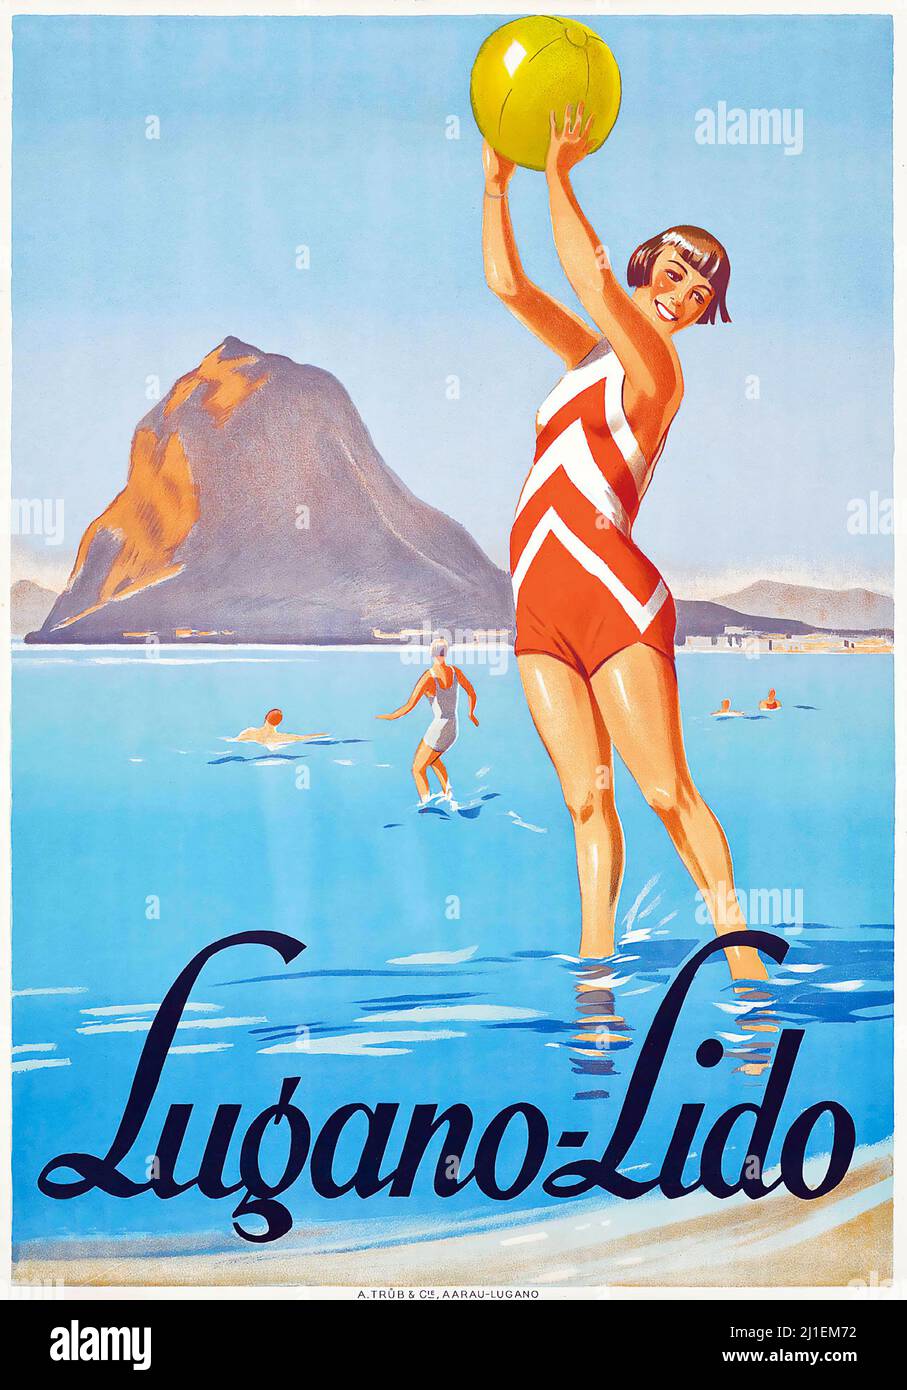 Vintage travel poster - Lugano-Lido. Sunbathing, beach. Anonymous artist. 1930s poster. Stock Photo